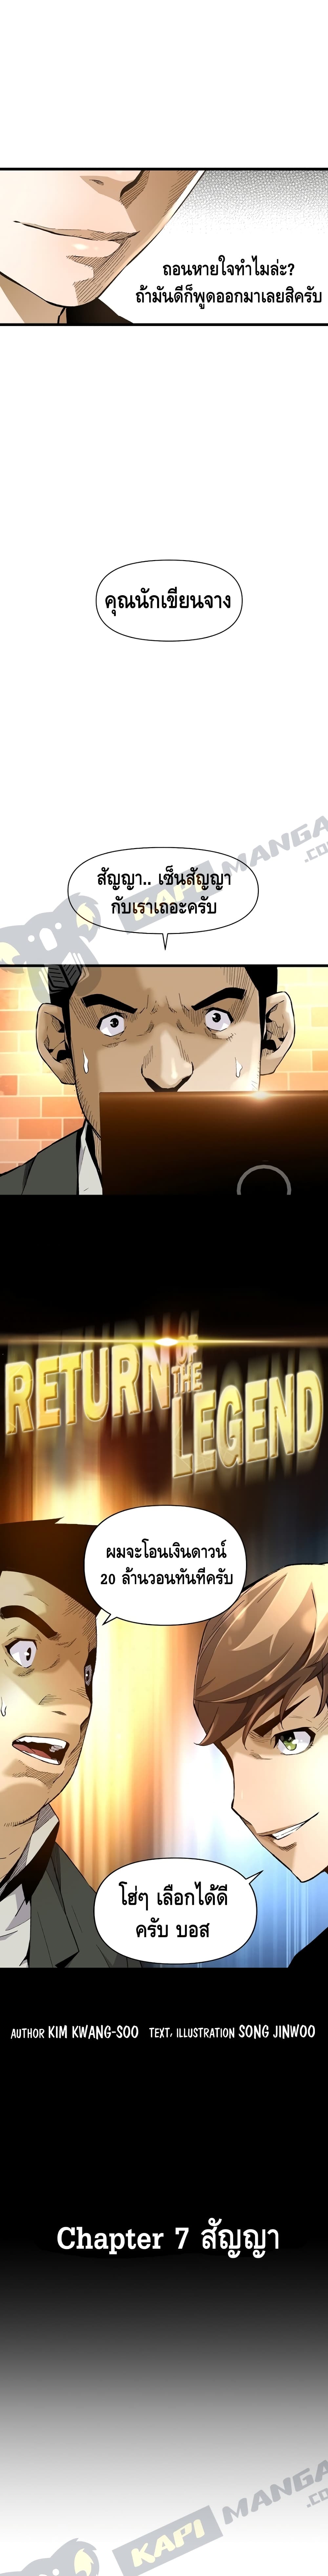 Return of the Legend 7 (3)